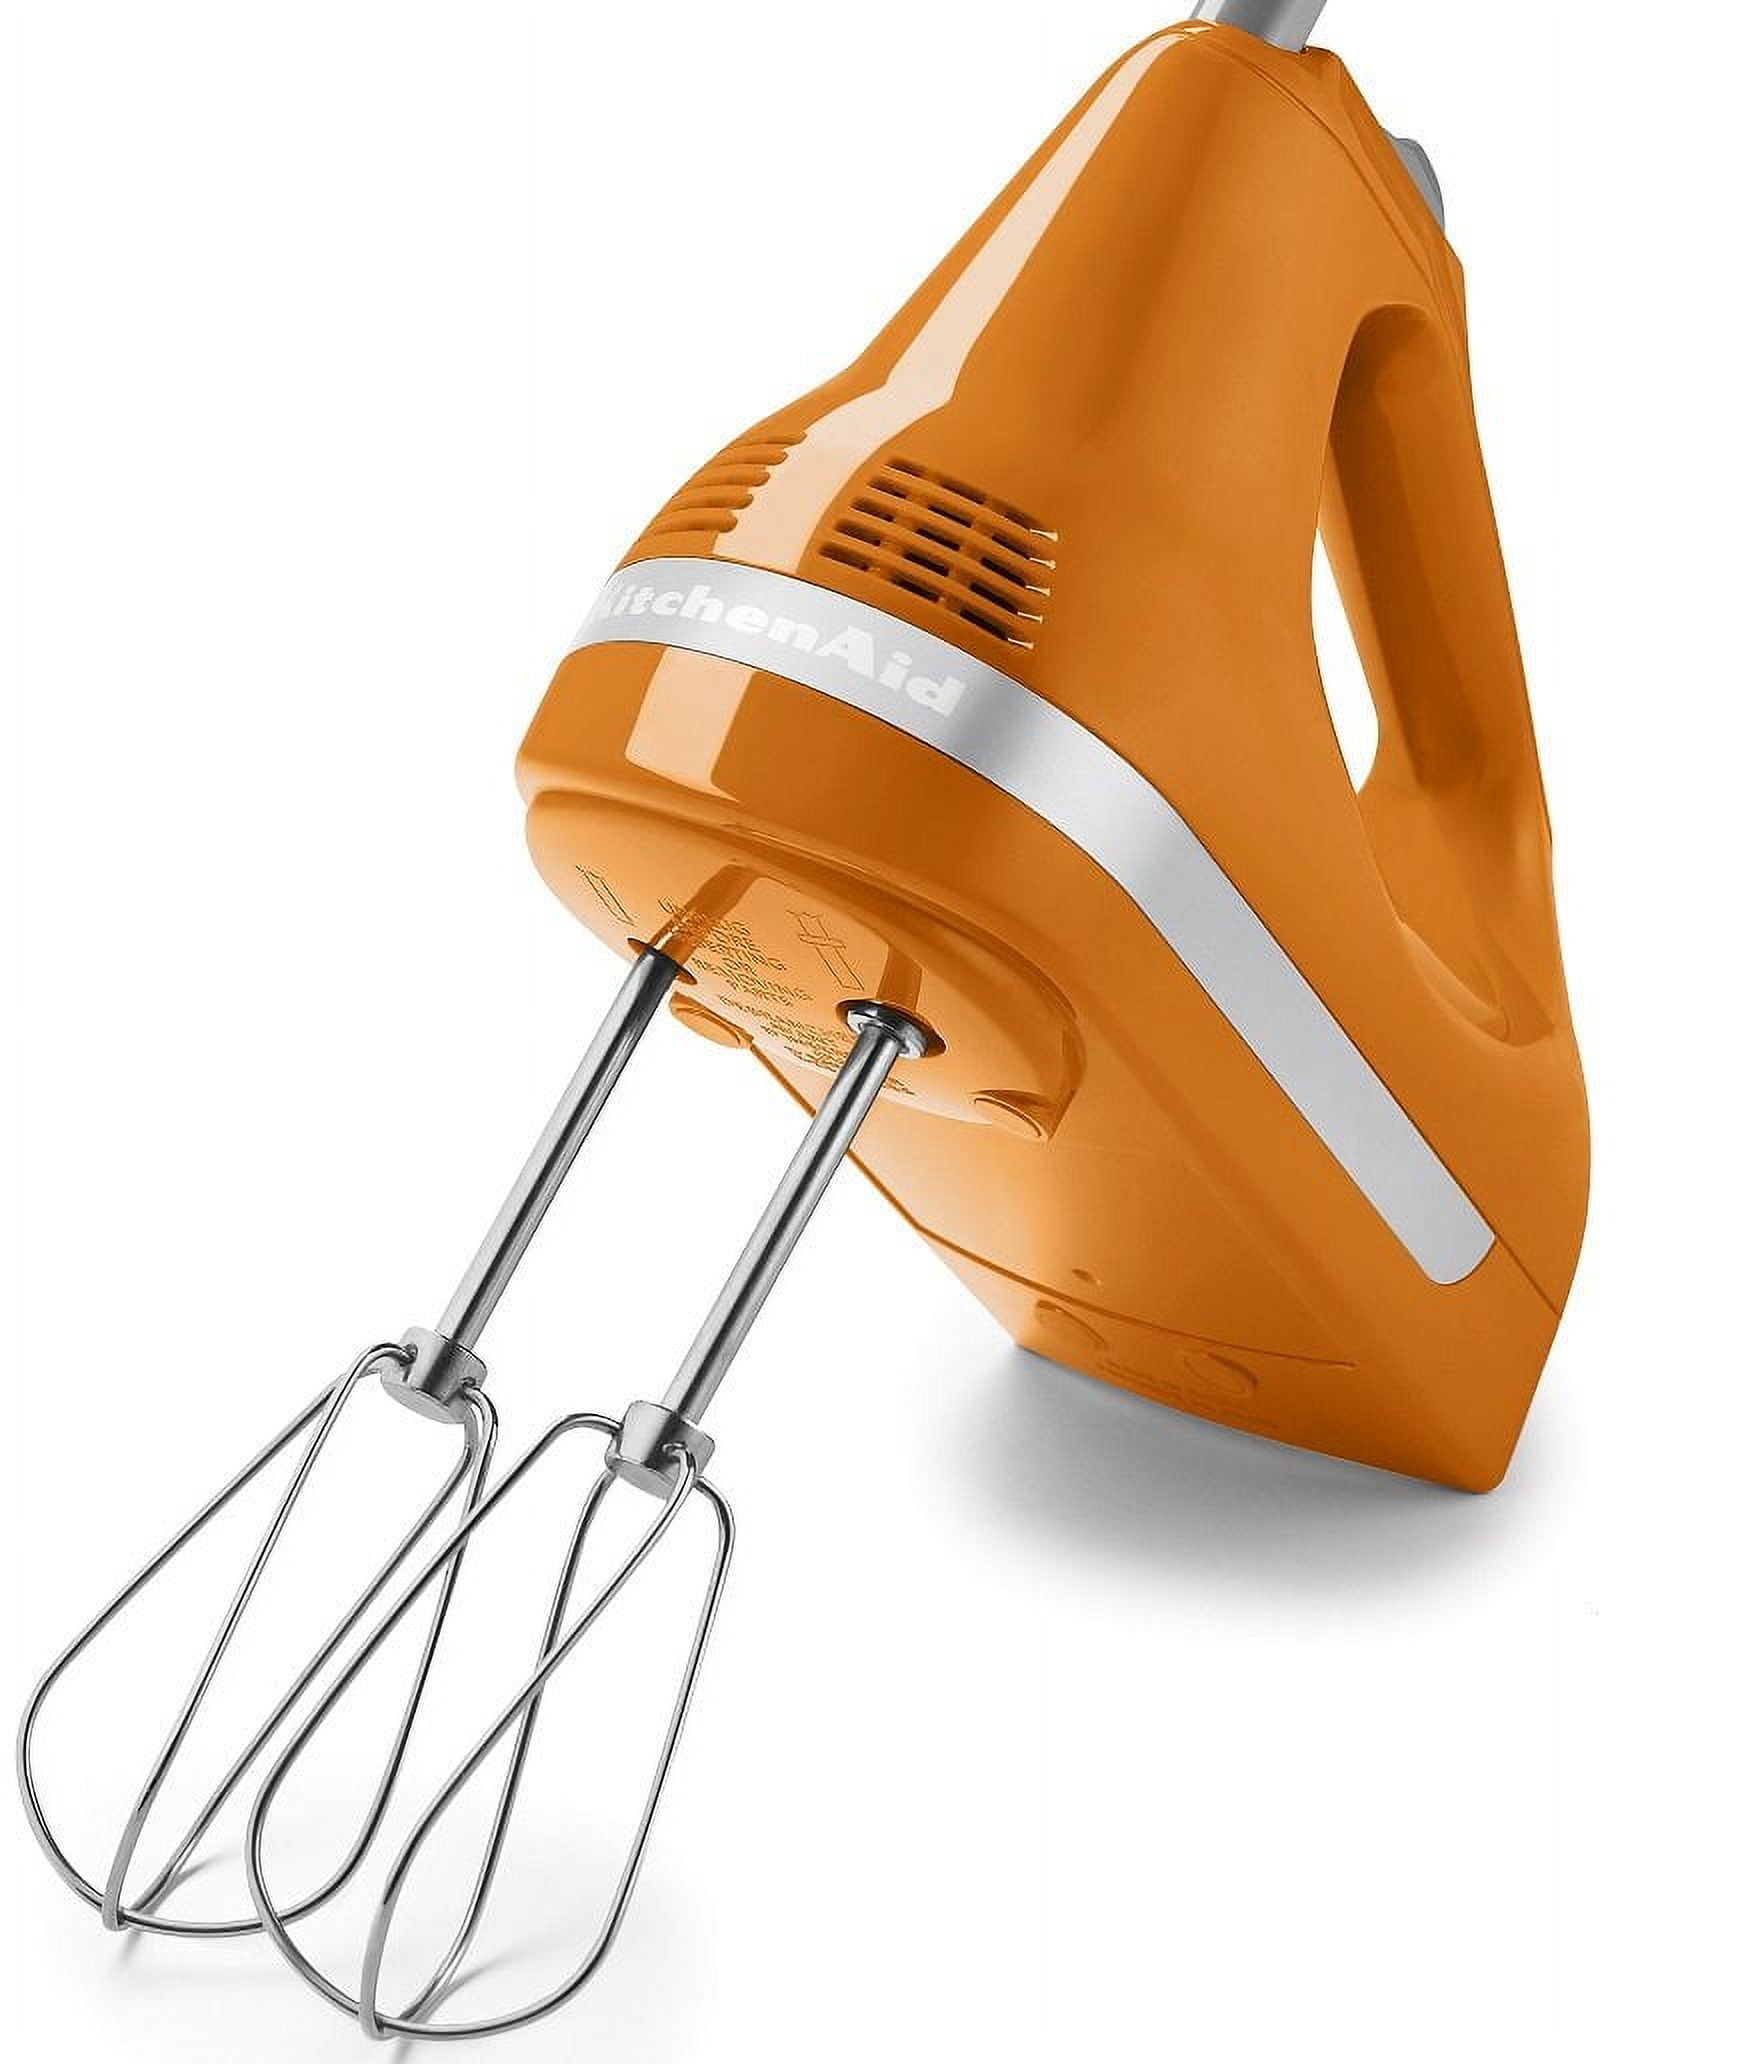 KitchenAid 9-Speed Hand Mixer, Tangerine (Certified Used) 